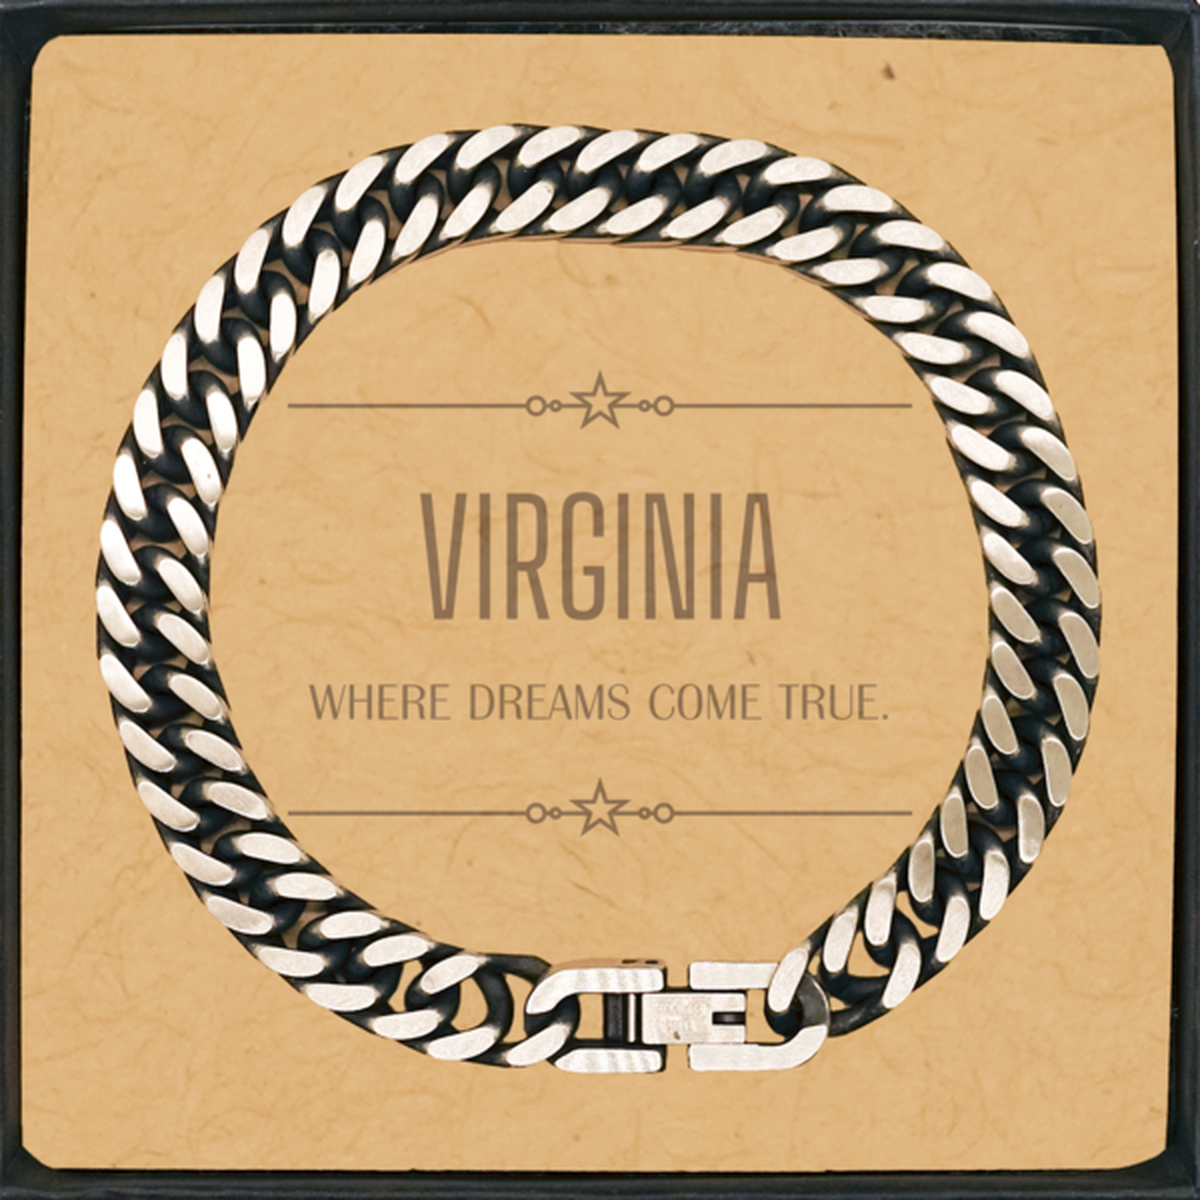 Love Virginia State Cuban Link Chain Bracelet, Virginia Where dreams come true, Birthday Inspirational Gifts For Virginia Men, Women, Friends